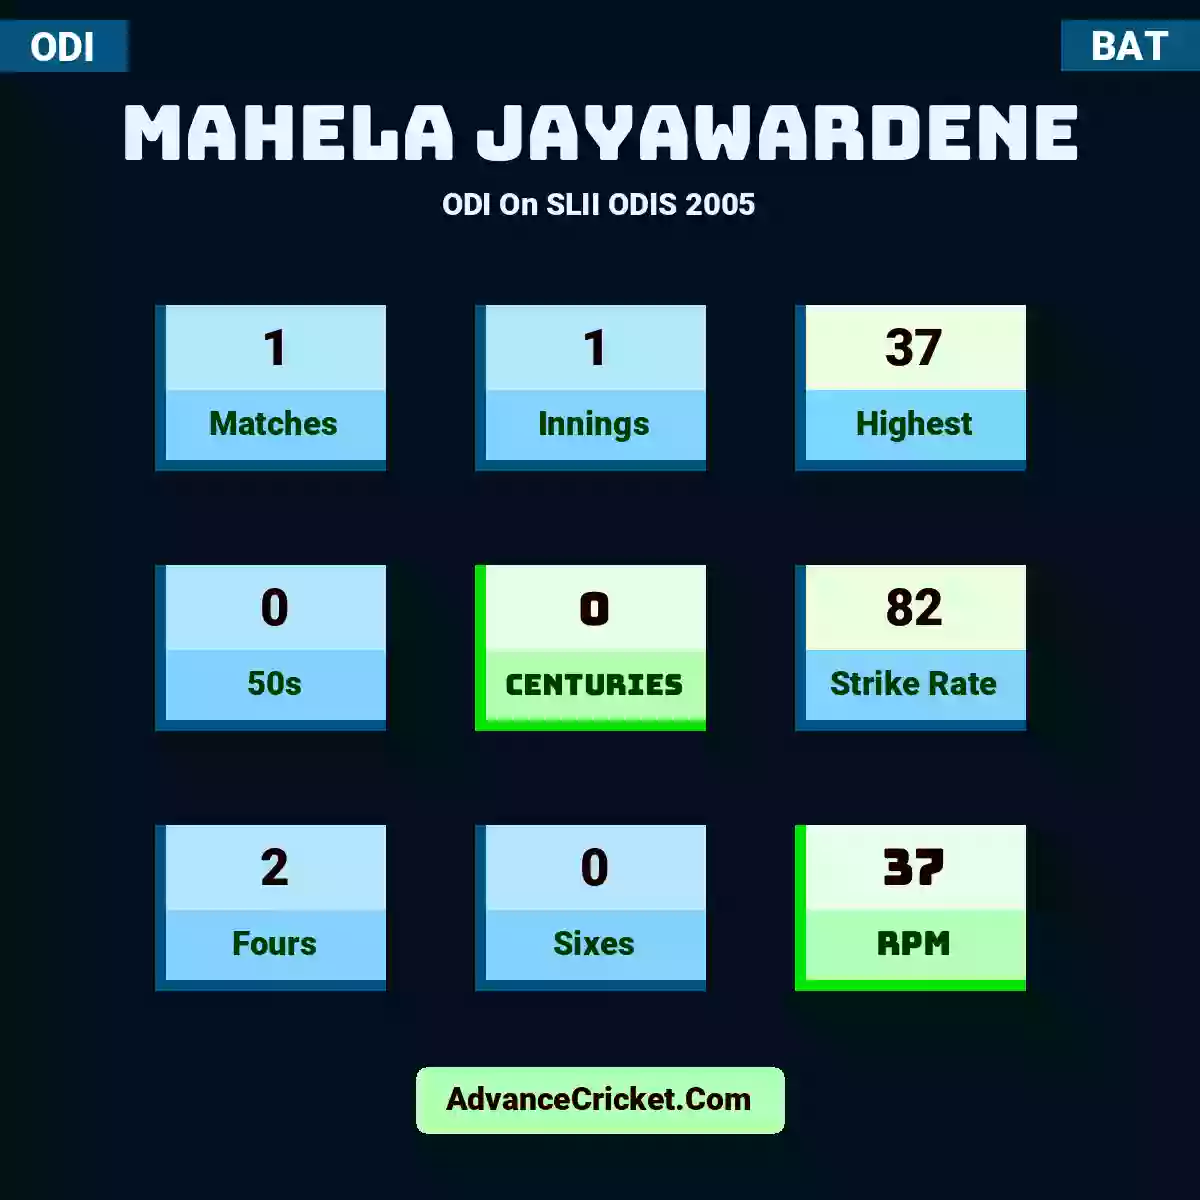 Mahela Jayawardene ODI  On SLII ODIS 2005, Mahela Jayawardene played 1 matches, scored 37 runs as highest, 0 half-centuries, and 0 centuries, with a strike rate of 82. M.Jayawardene hit 2 fours and 0 sixes, with an RPM of 37.